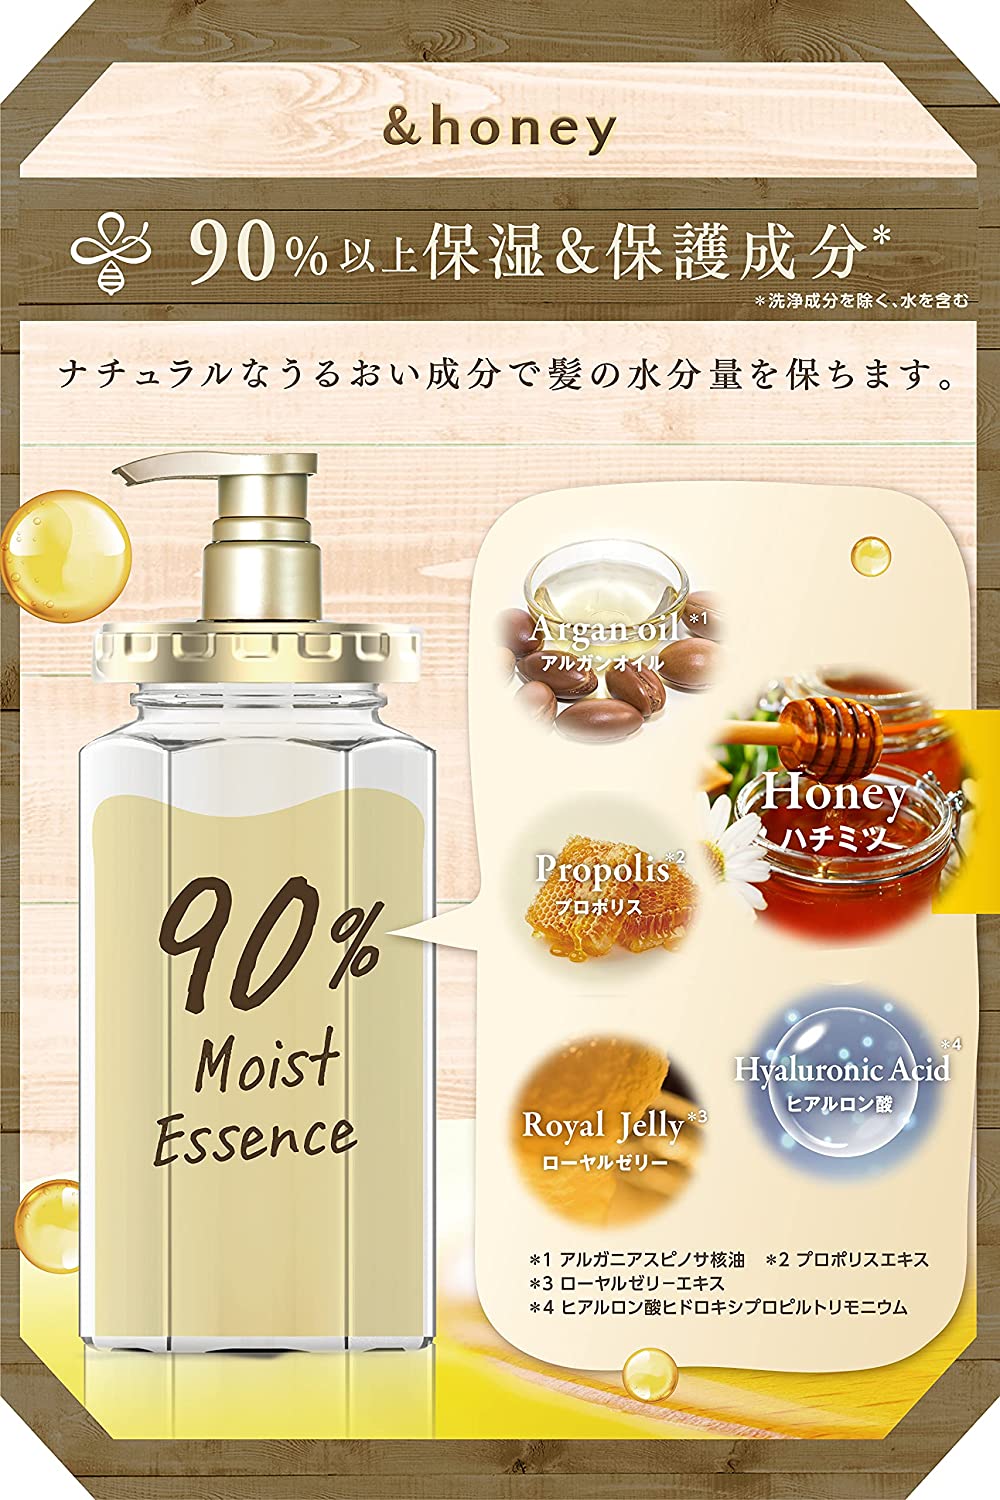 &honey Deep Moisture Shampoo 1.0 440ml